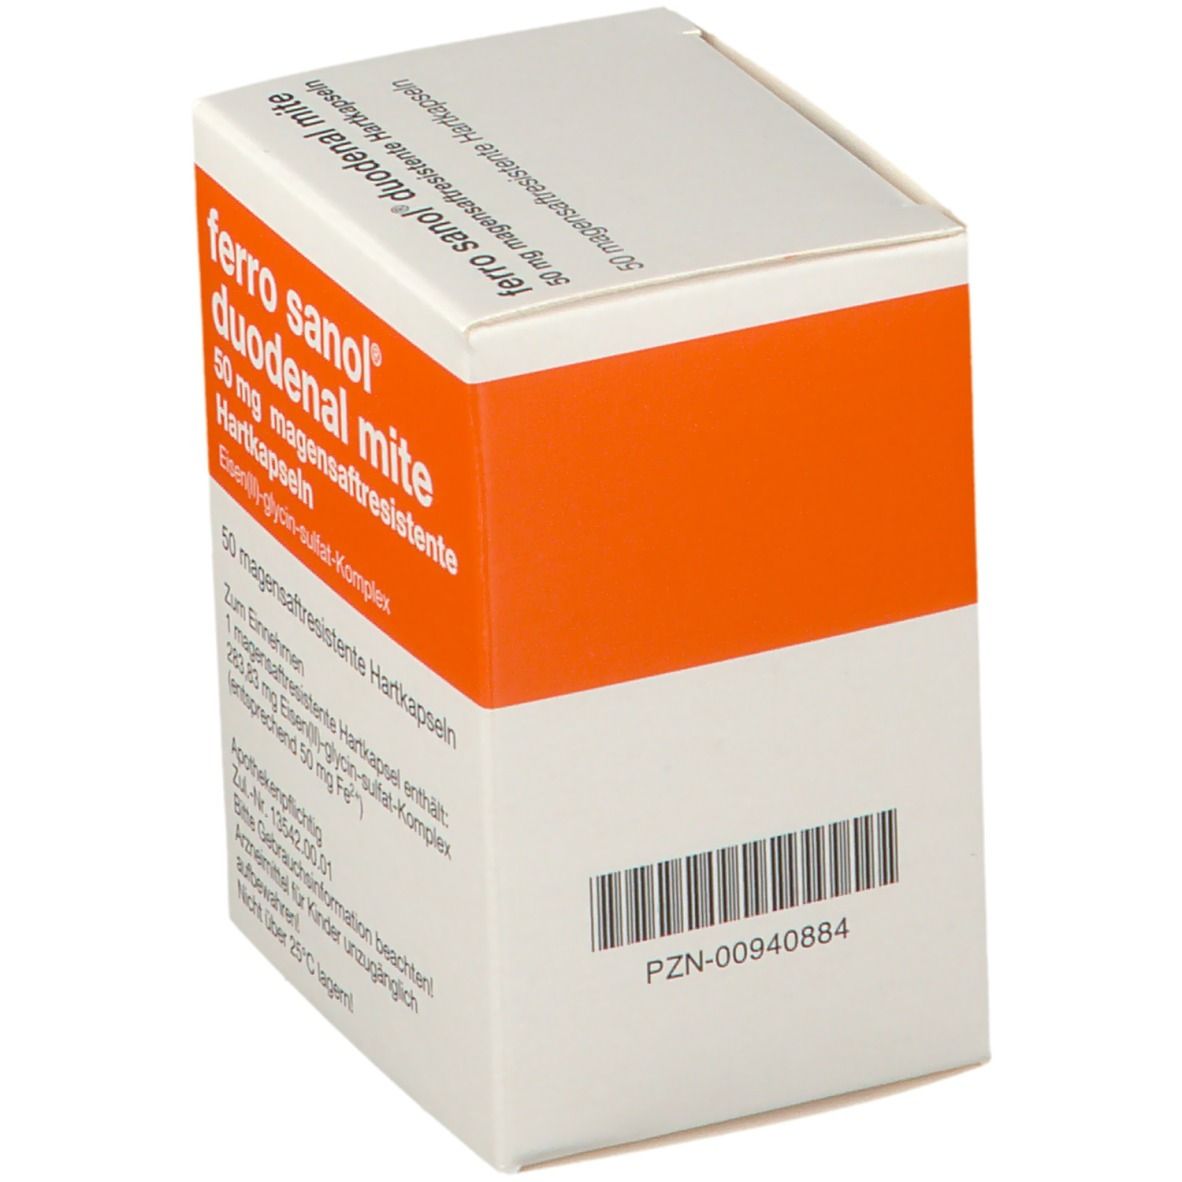 ferro sanol® duodenal mite 50 mg Kapseln